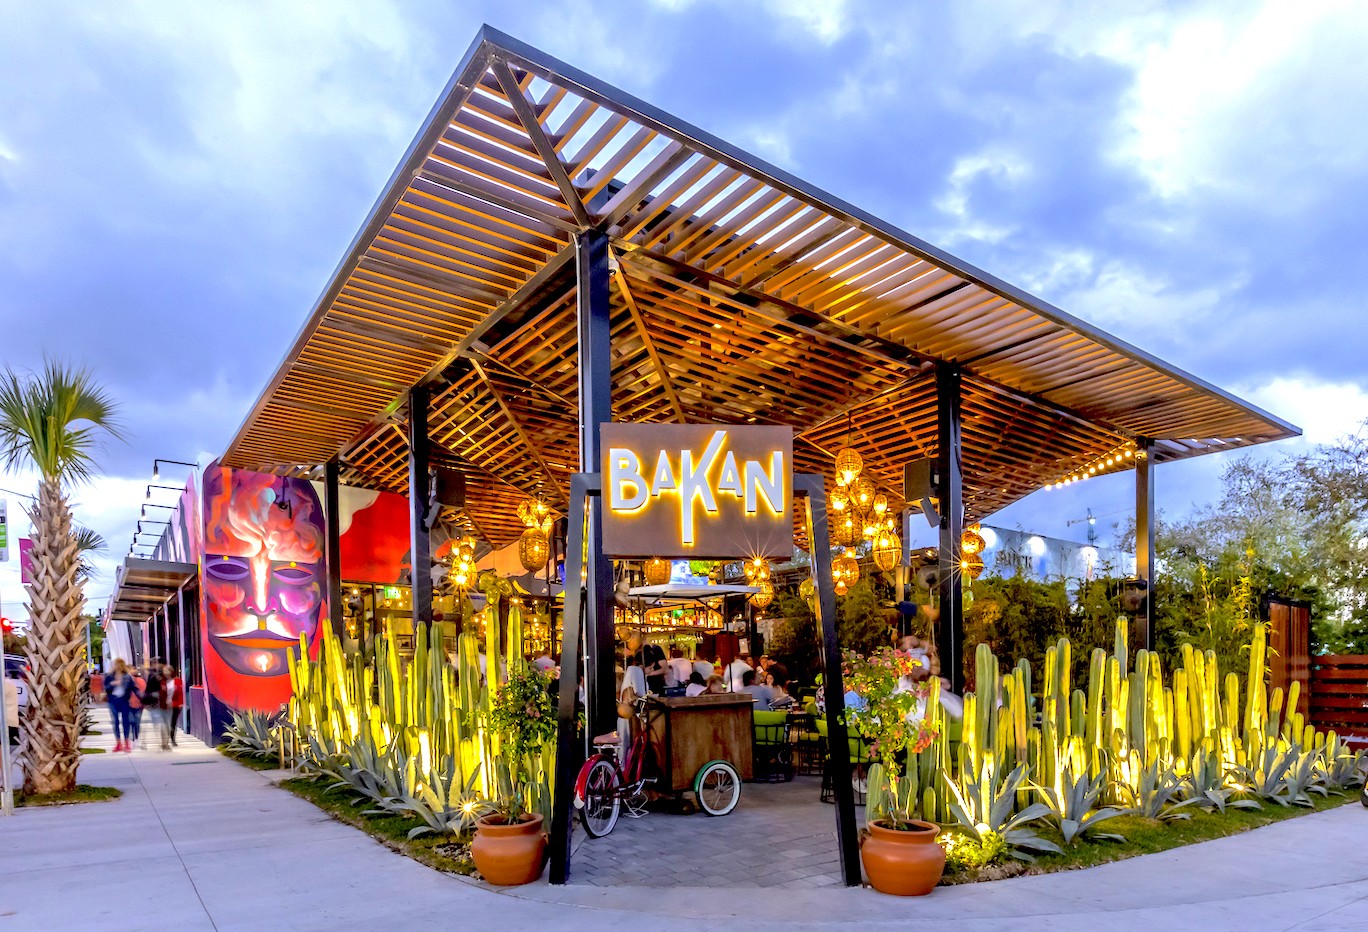 The top 5 restaurants of Miami's Design District